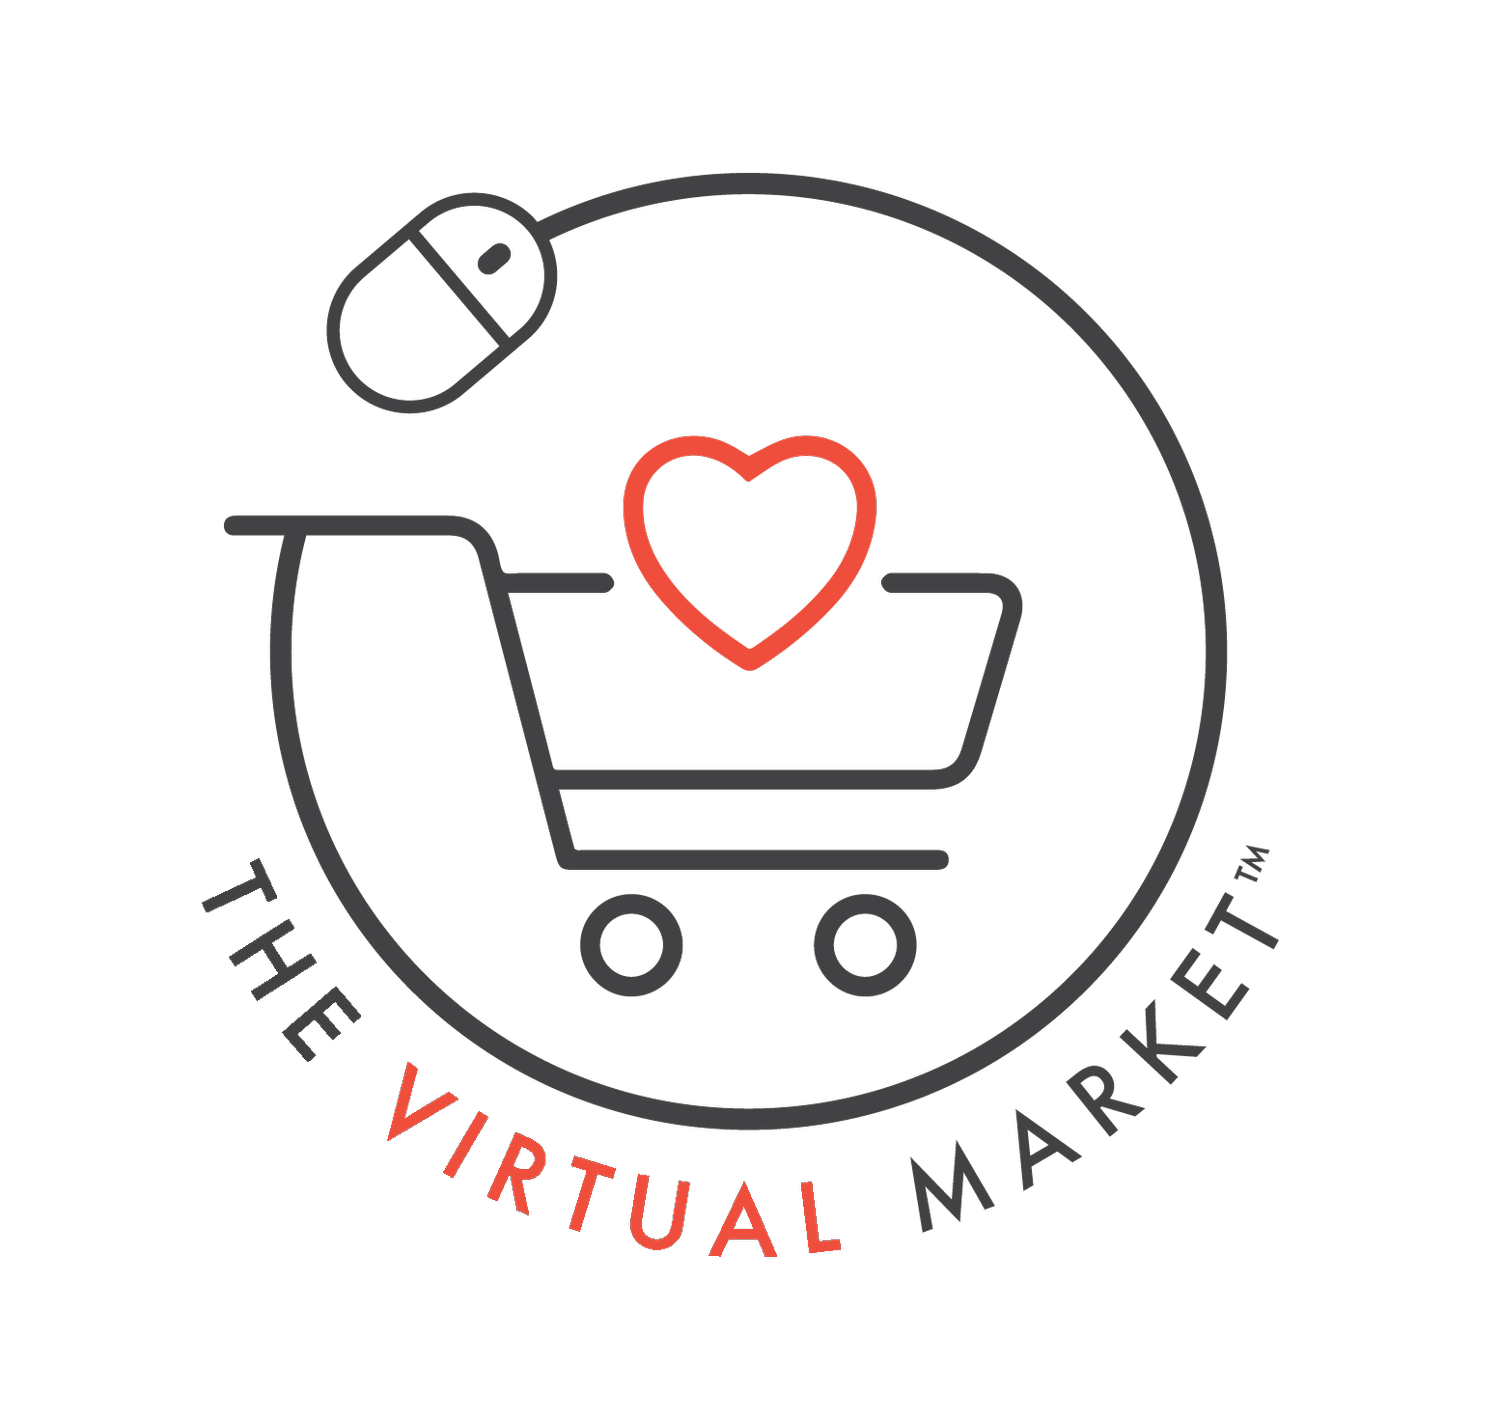 The Virtual Market